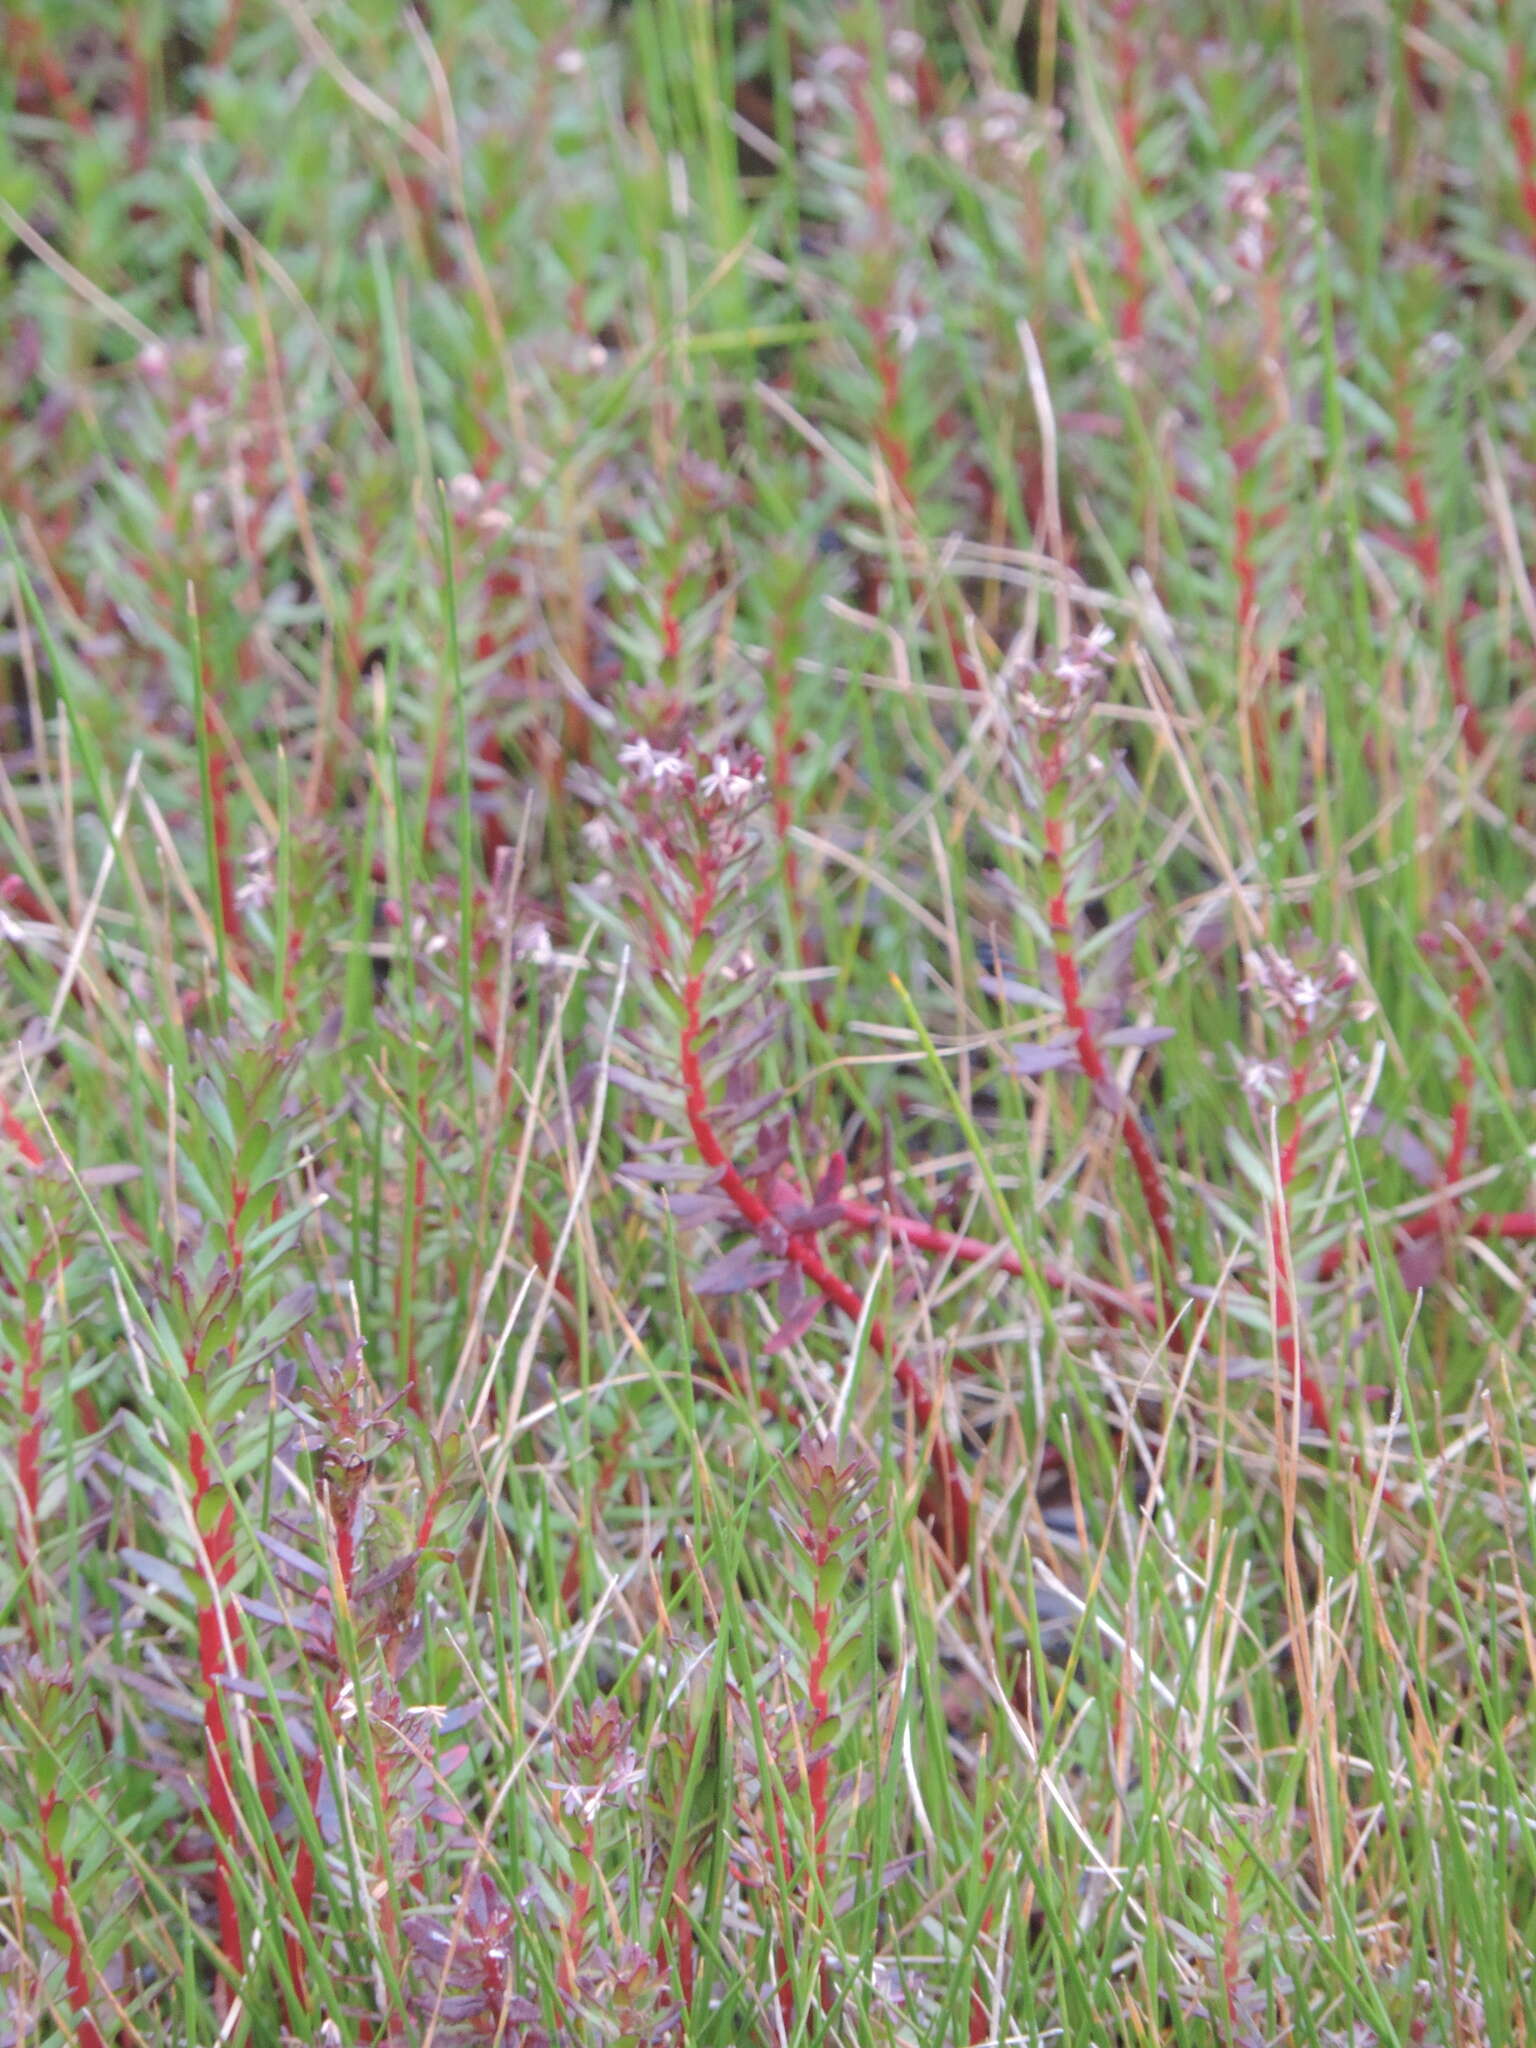 Image of Laurembergia repens subsp. brachypoda (Welw. ex Hiern) Oberm.